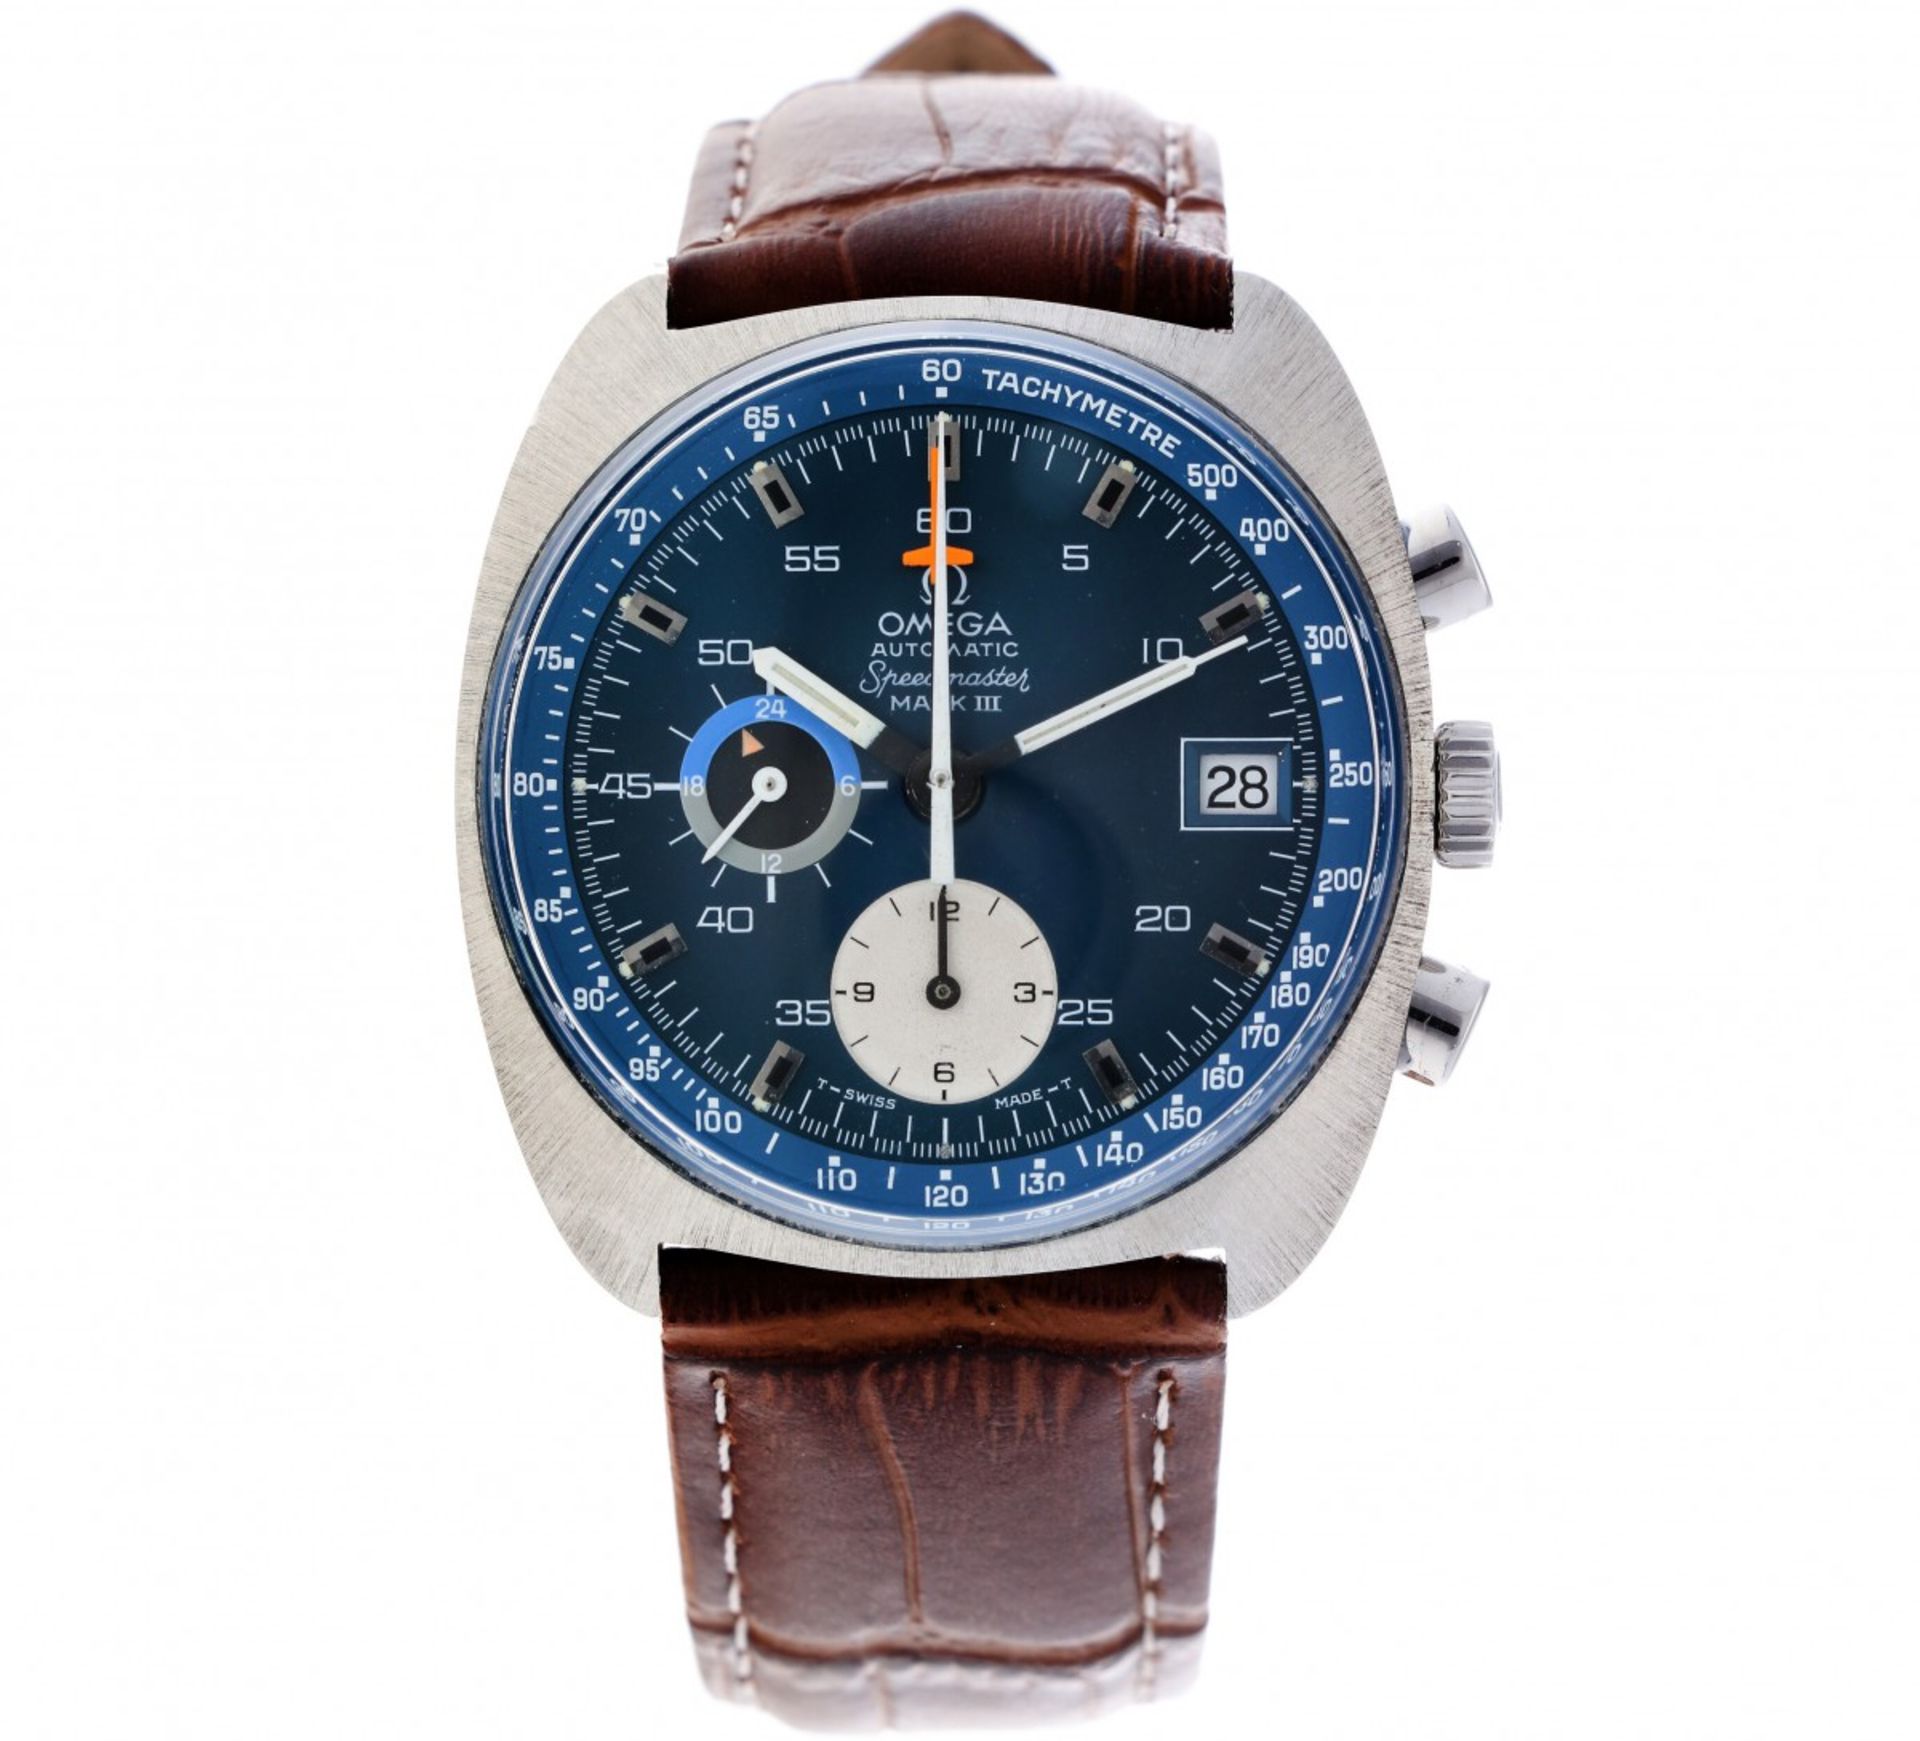 Omega Speedmaster Mark III 176.007 - Men's watch - ca. 1970